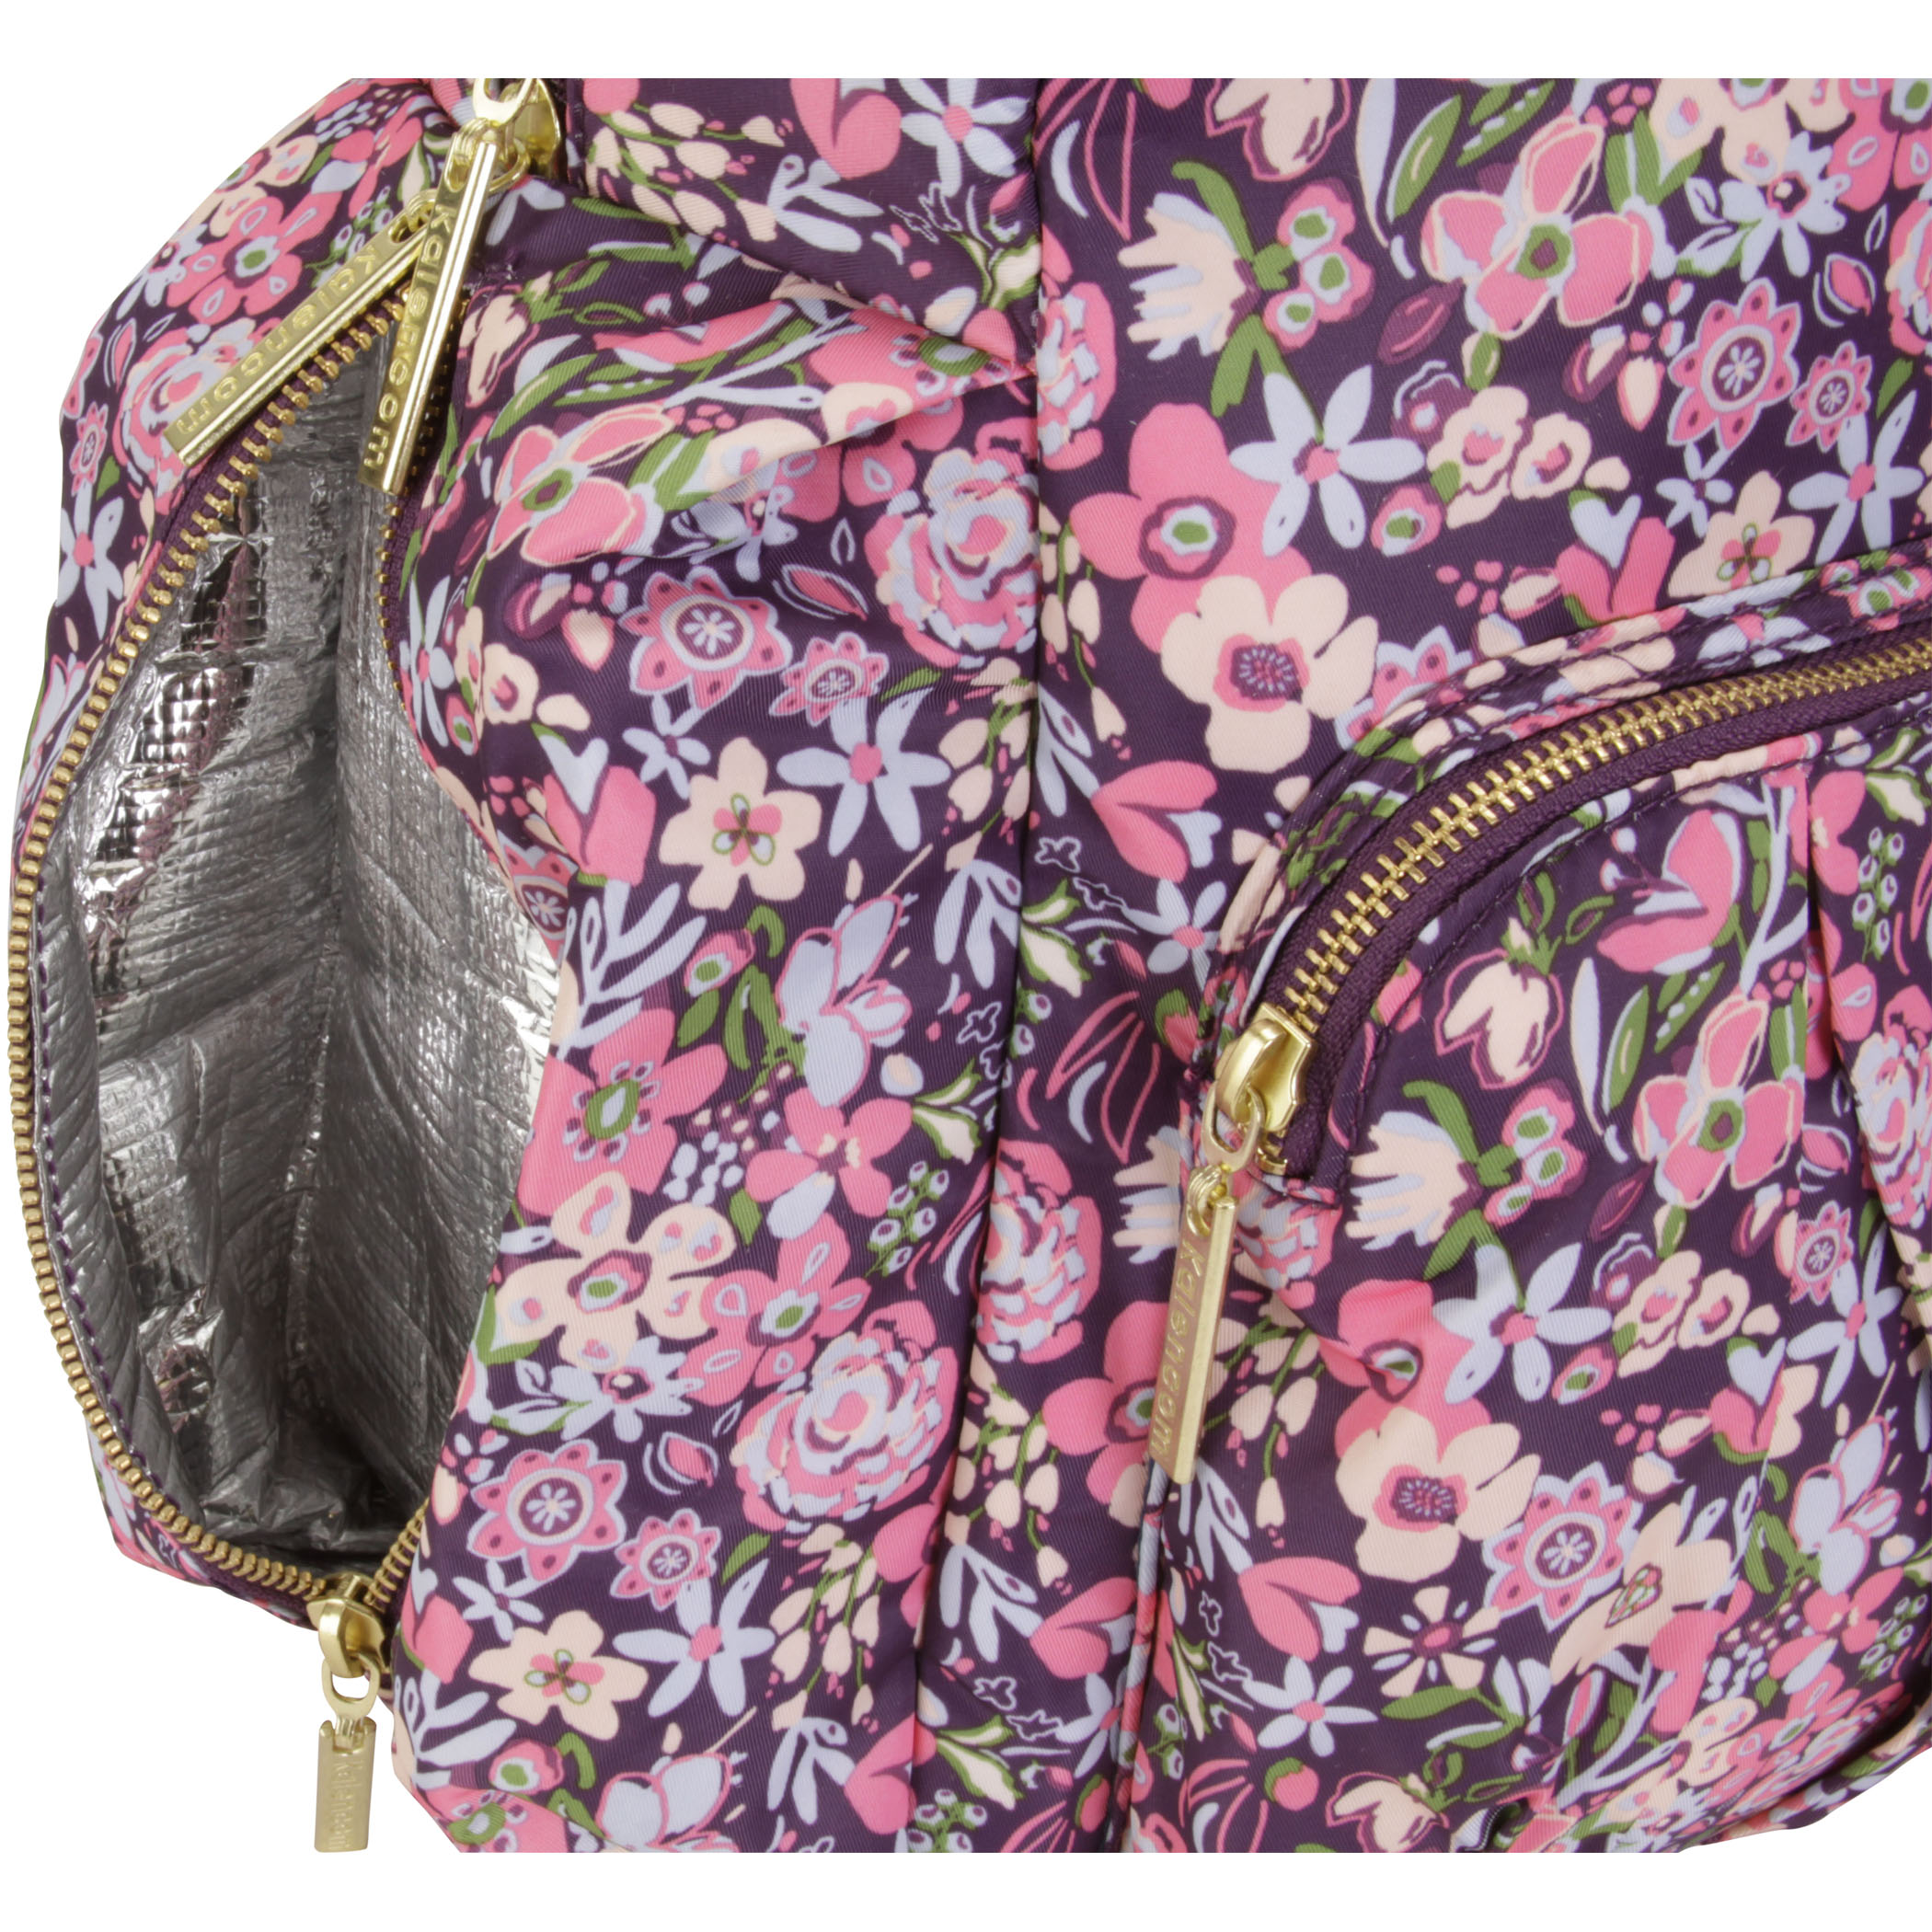 Kalencom Chicago Backpack / Urban Sling Diaper Bag in Blossoms - image 5 of 7